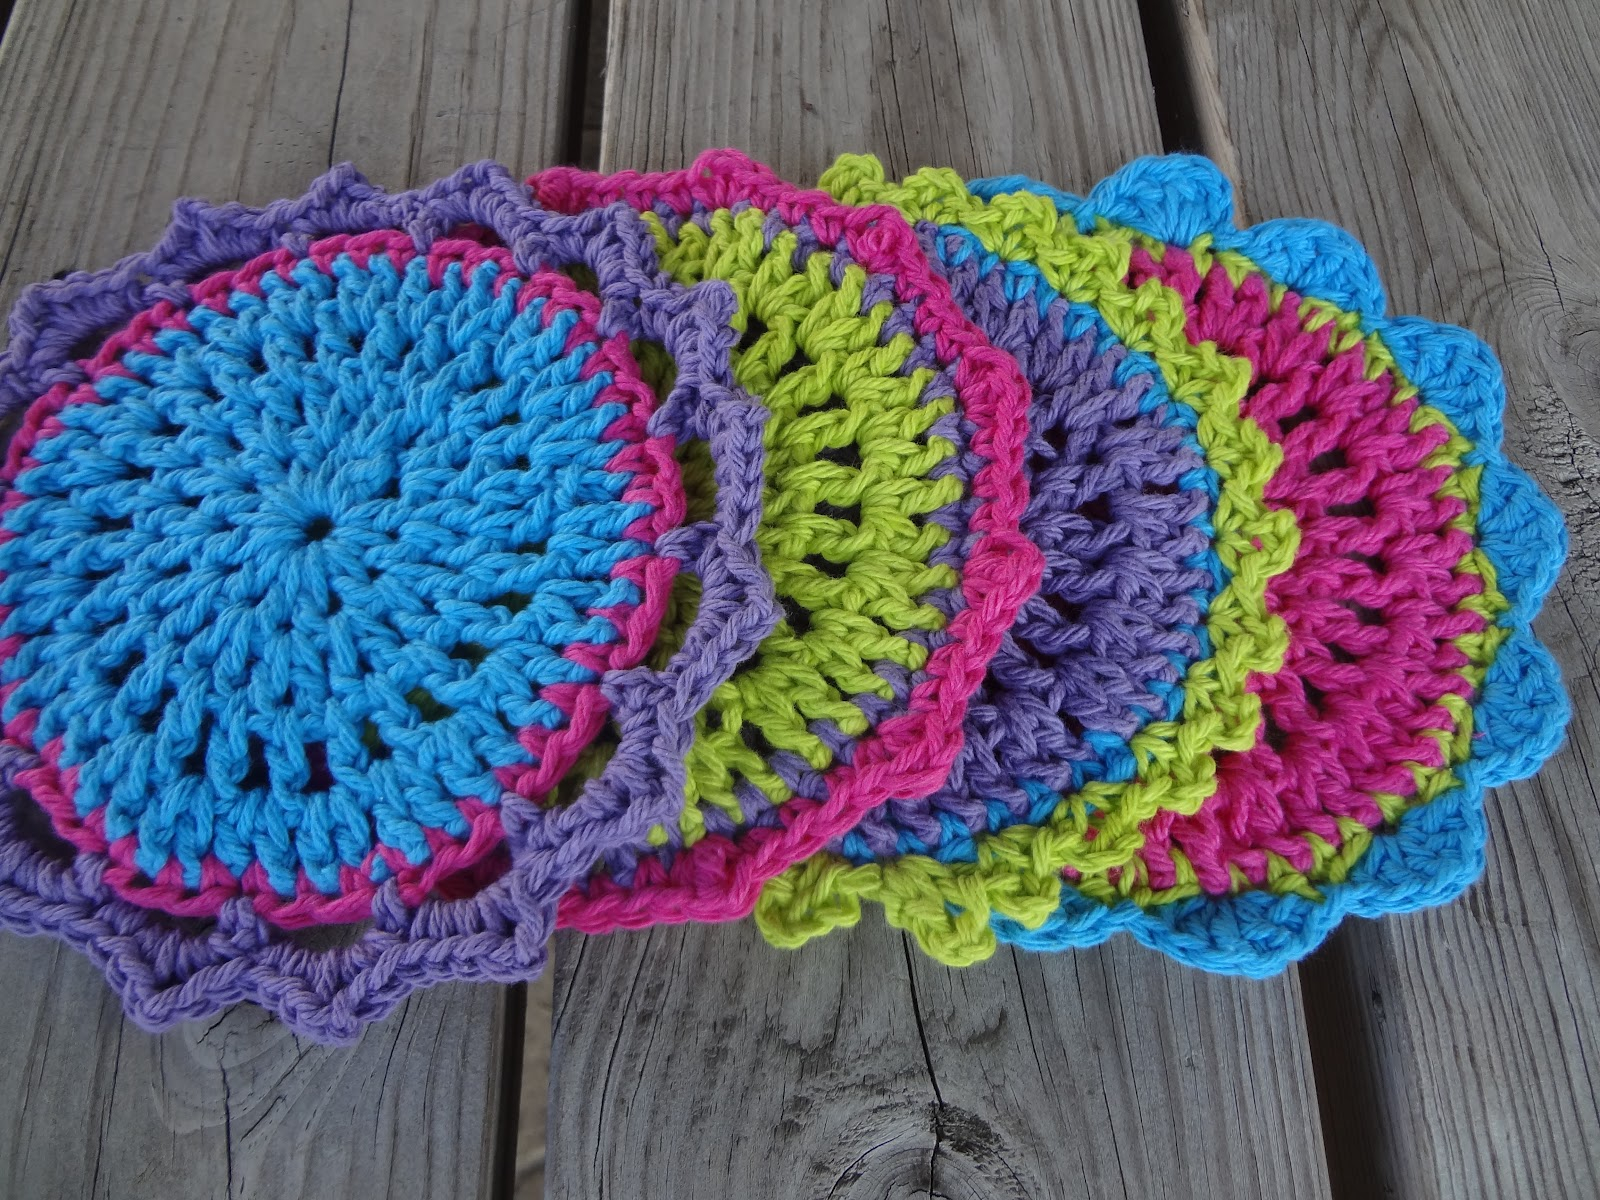 Crochet Dishcloth Free Pattern 20 Crochet Dishcloth Patterns Guide Patterns